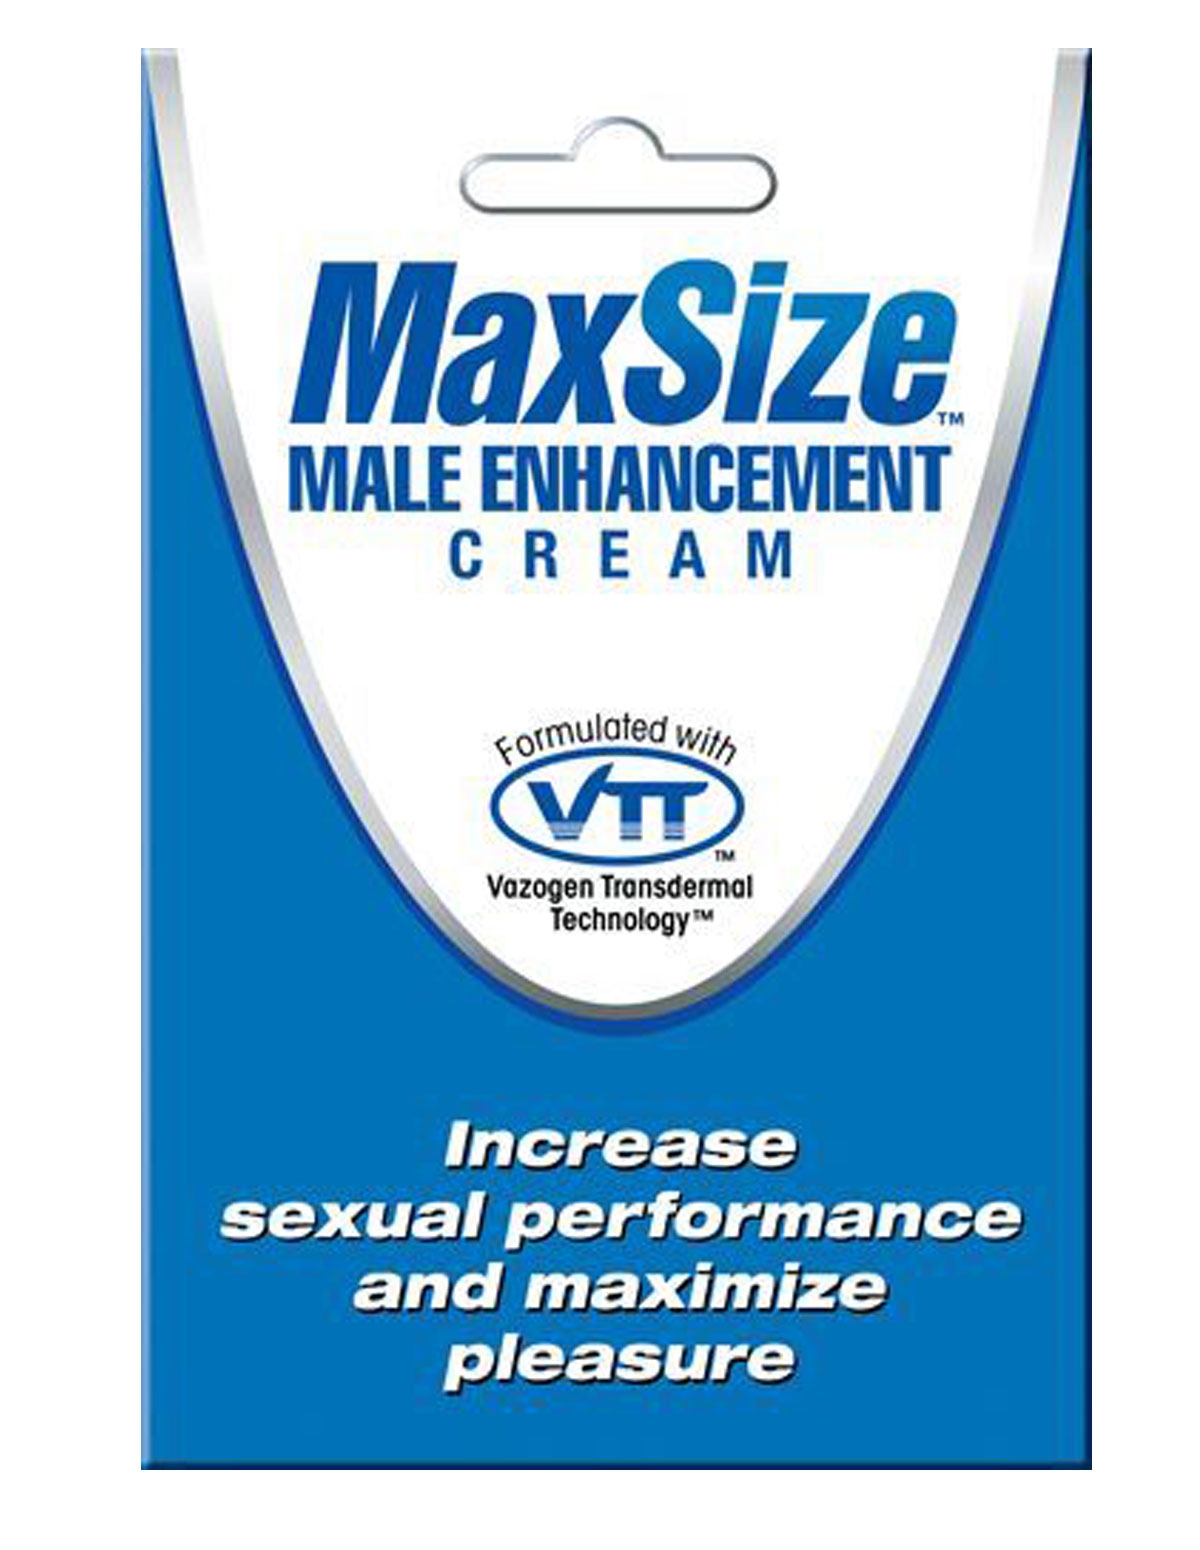 alternate image for Maxsize Cream Pack